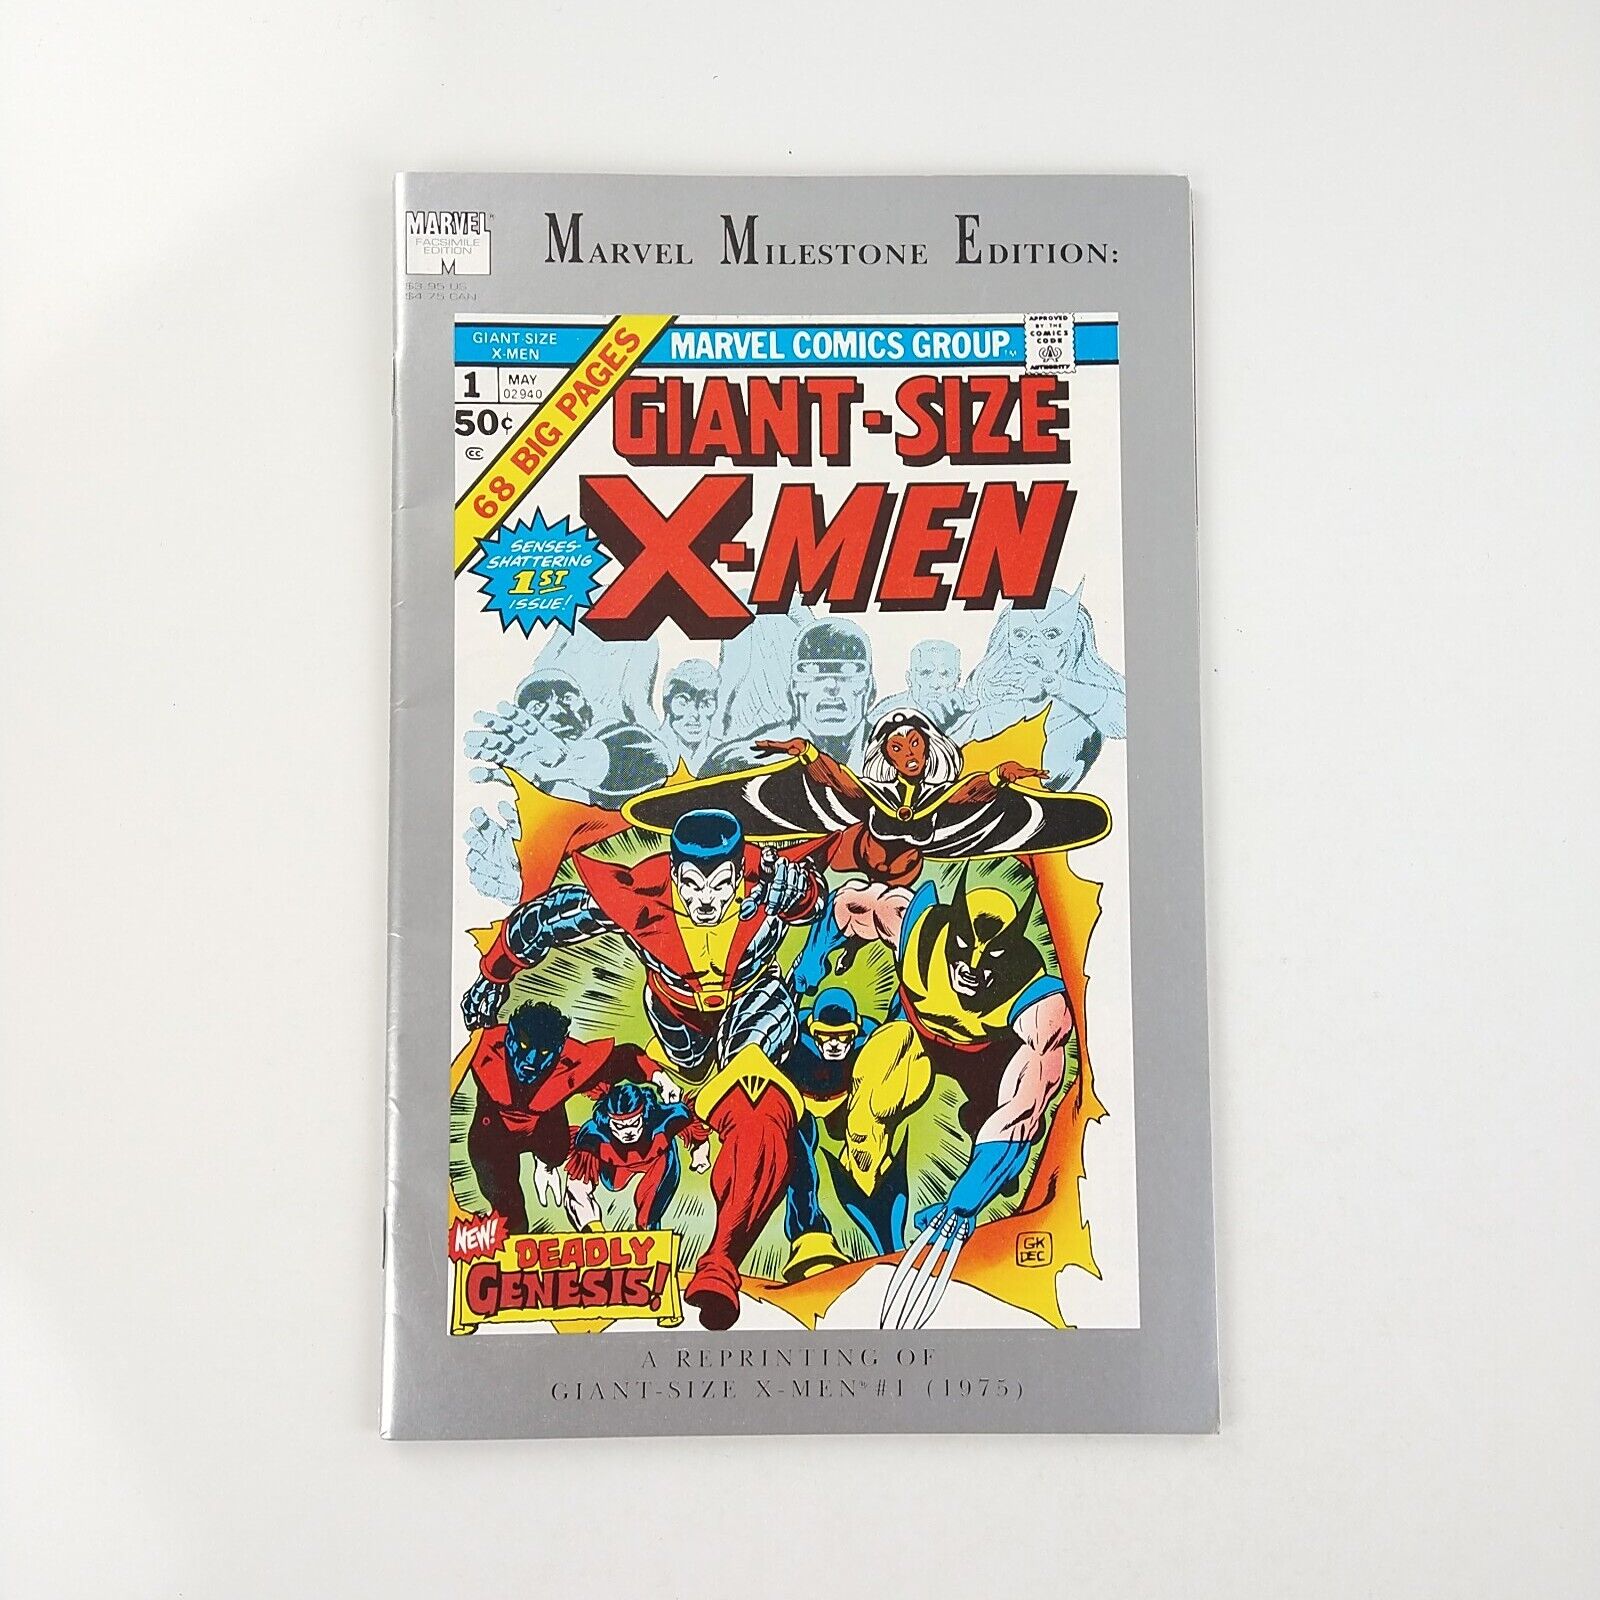 Giant-Size X-Men #1 Marvel Milestone Reprint Edition (1991 Marvel Comics)